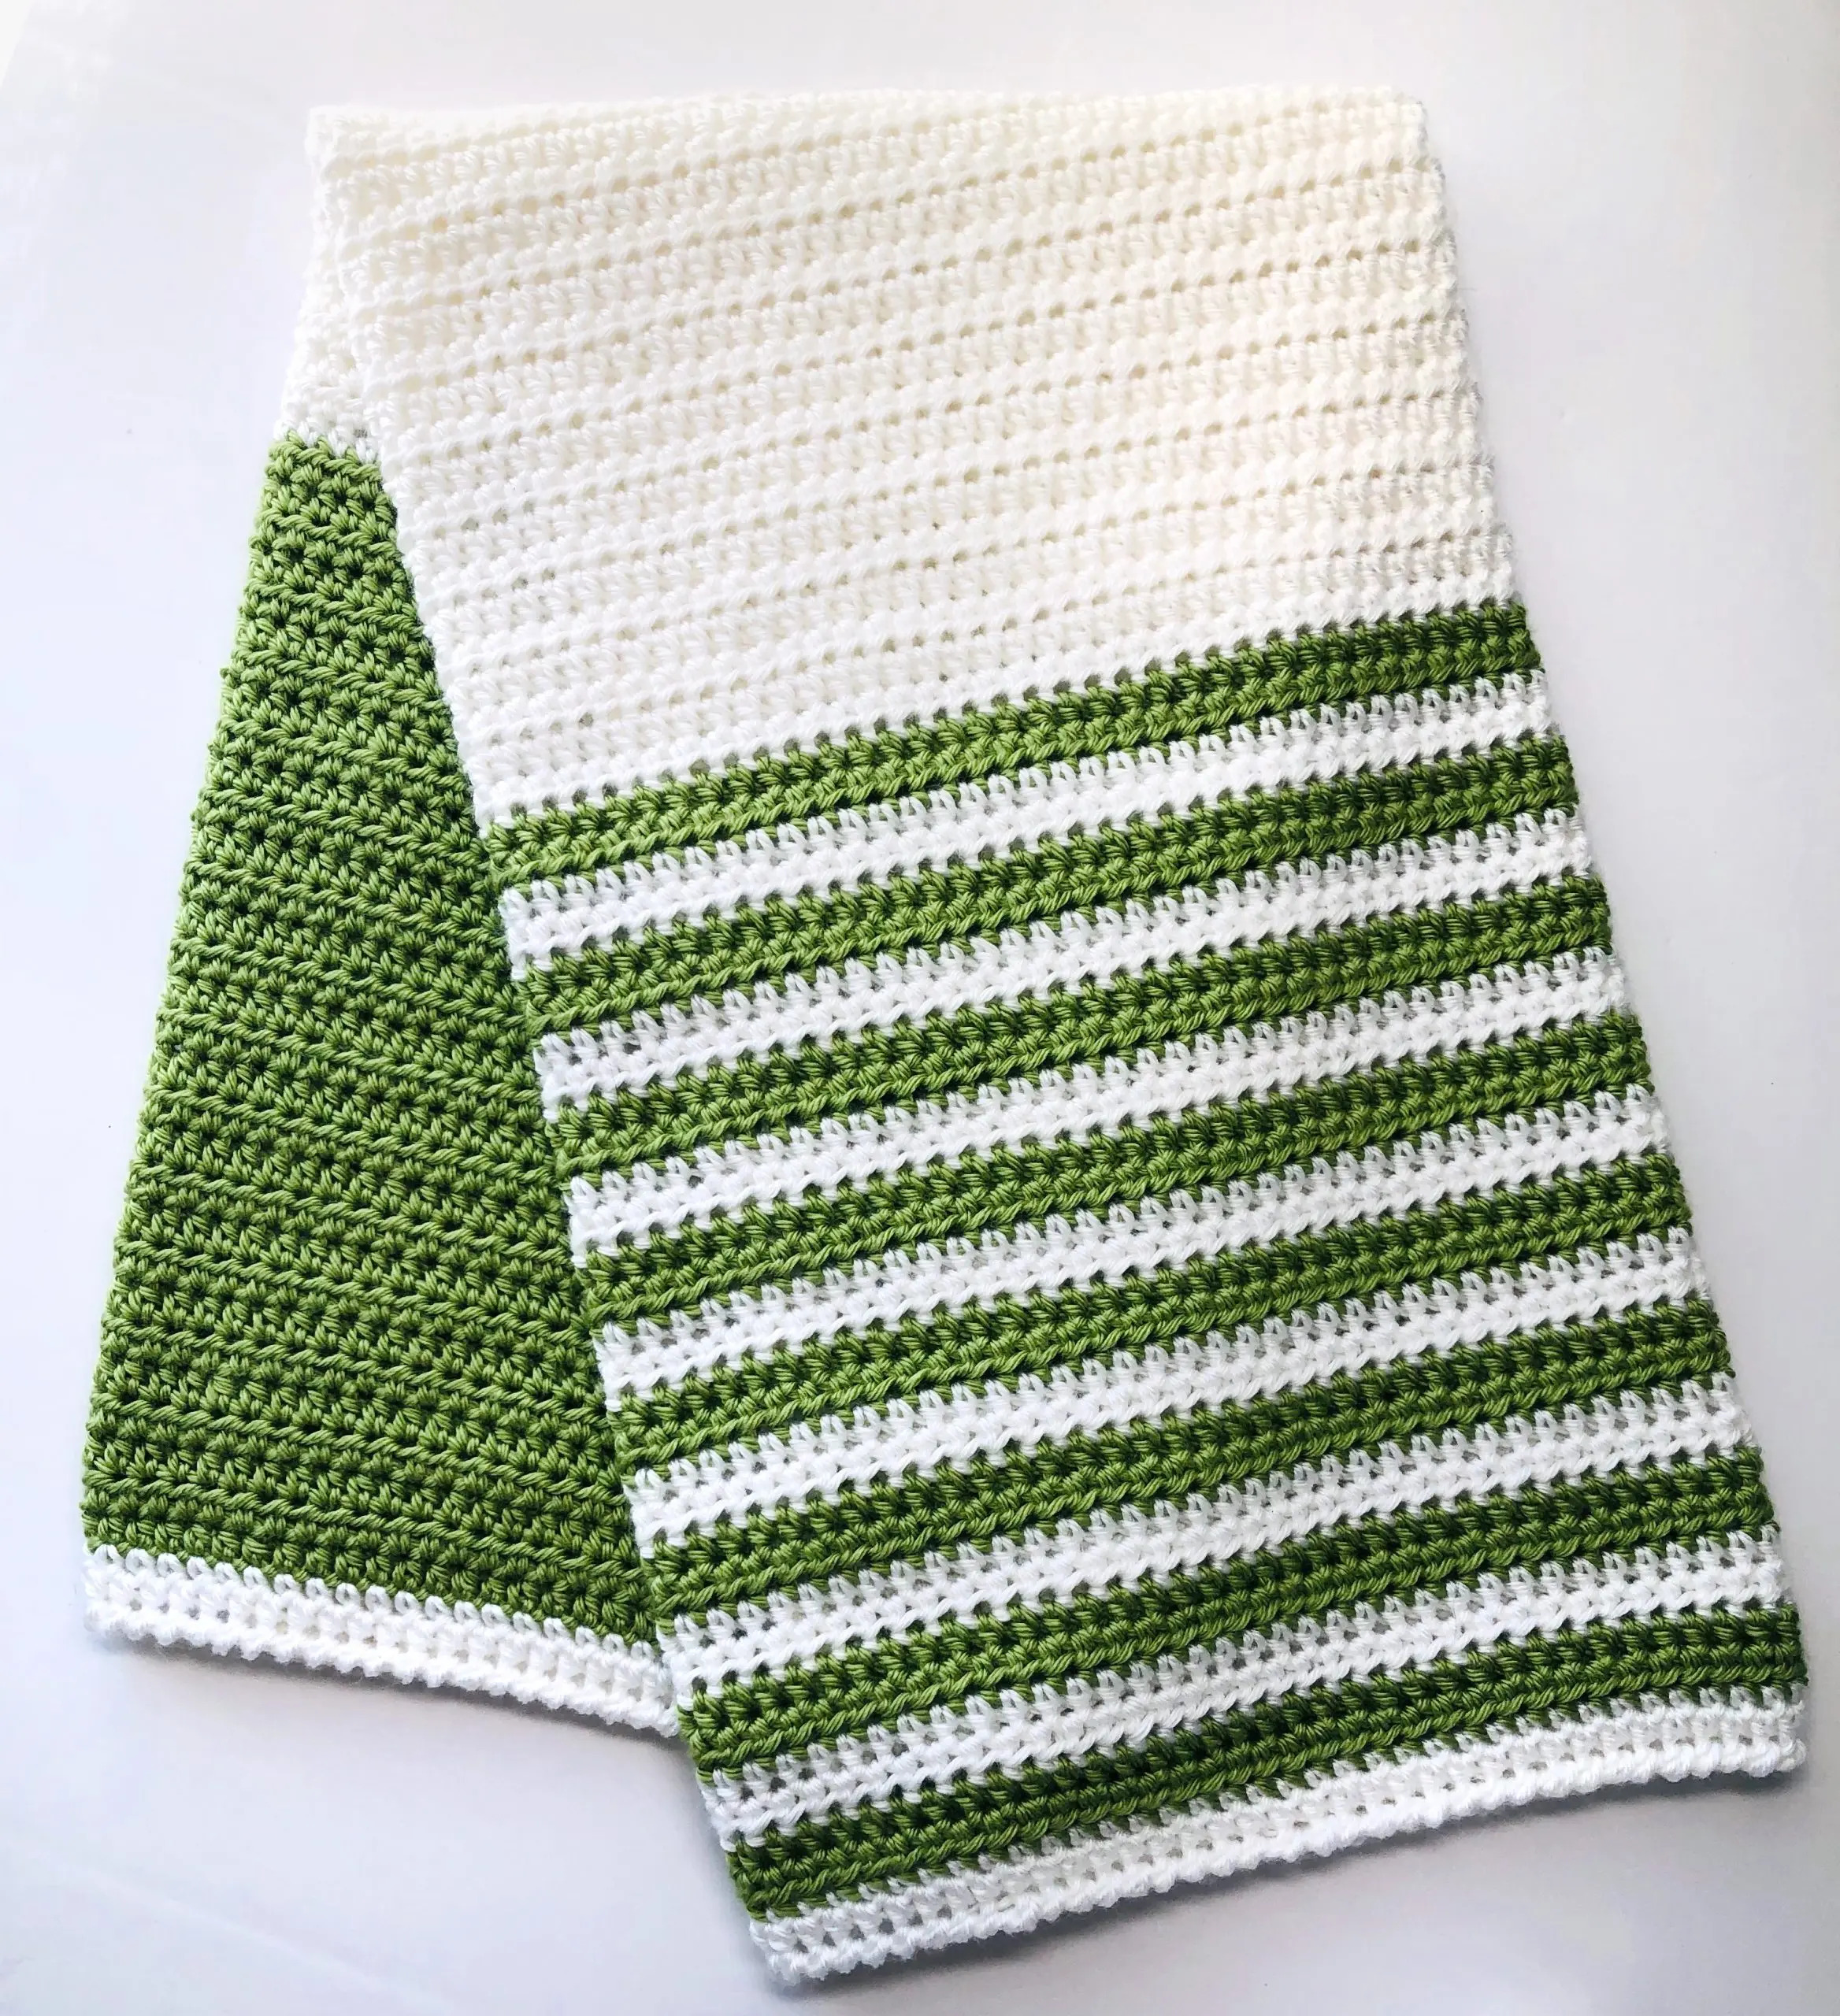 Beginner's Guide to Crafting Stunning Striped Crochet Blanket